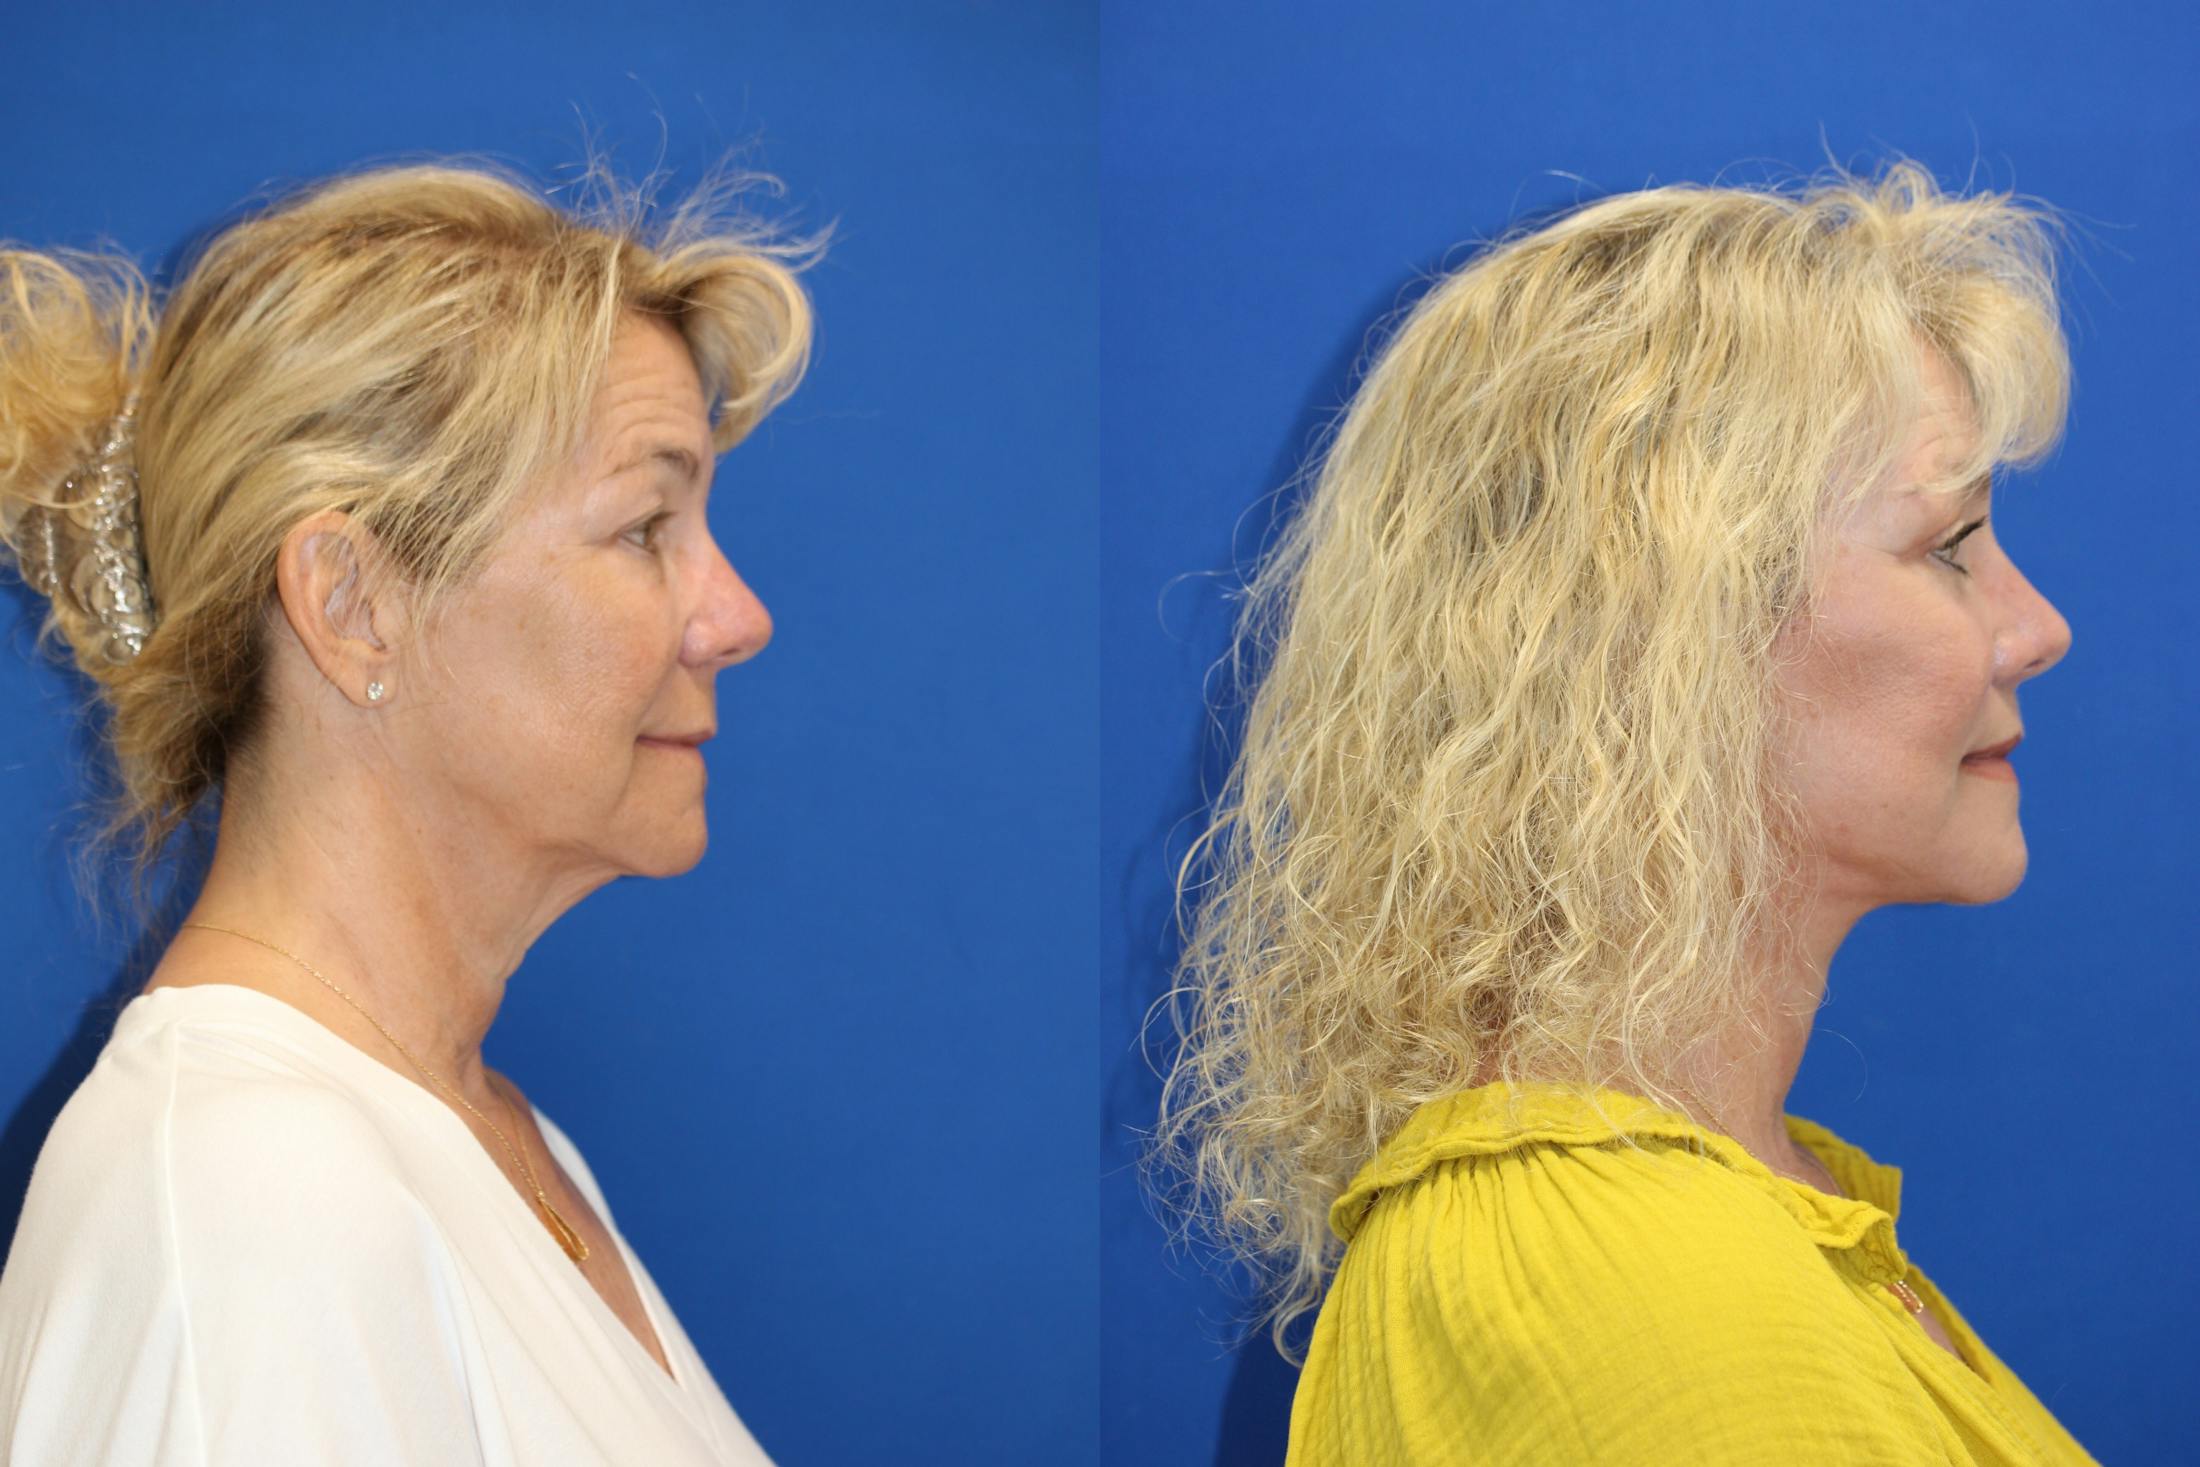 Vertical Restore® / Facial Rejuvenation Before & After Gallery - Patient 153265711 - Image 3